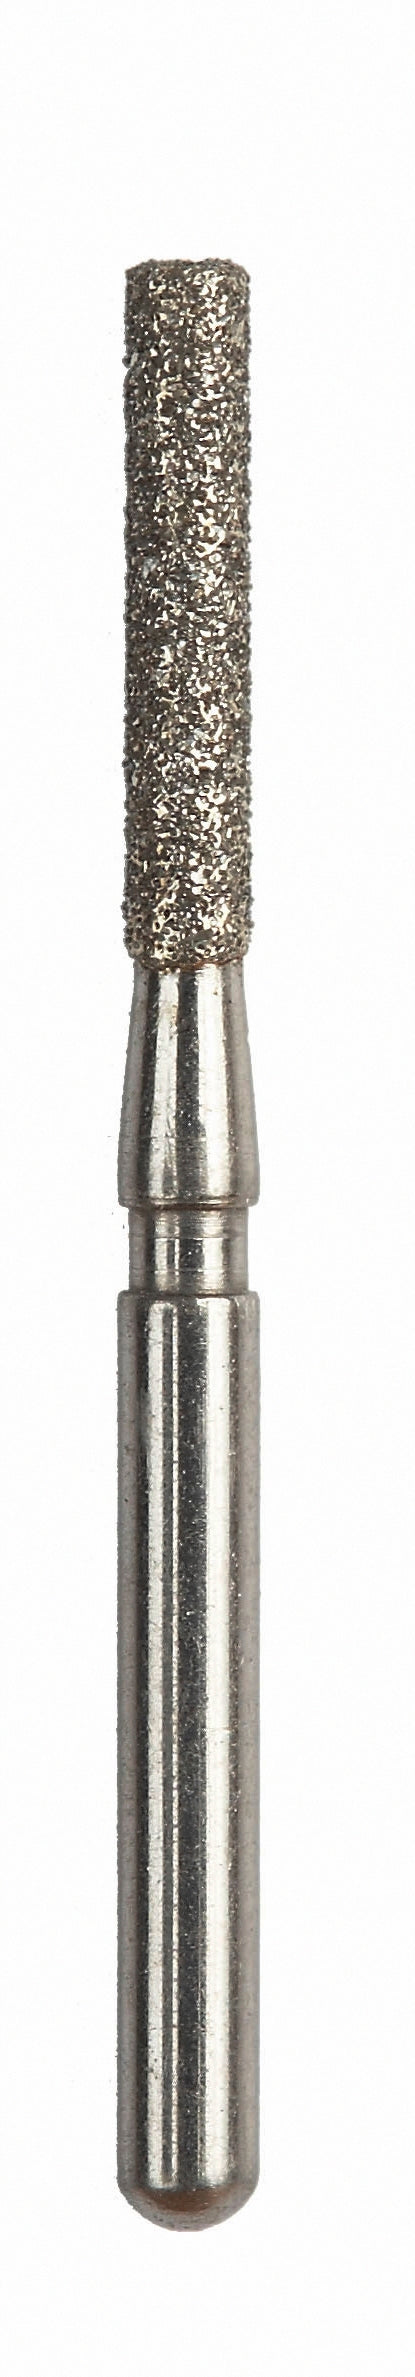 837014 Medium-Flat end Cylinder-Diamond Coated (Pack of 6)